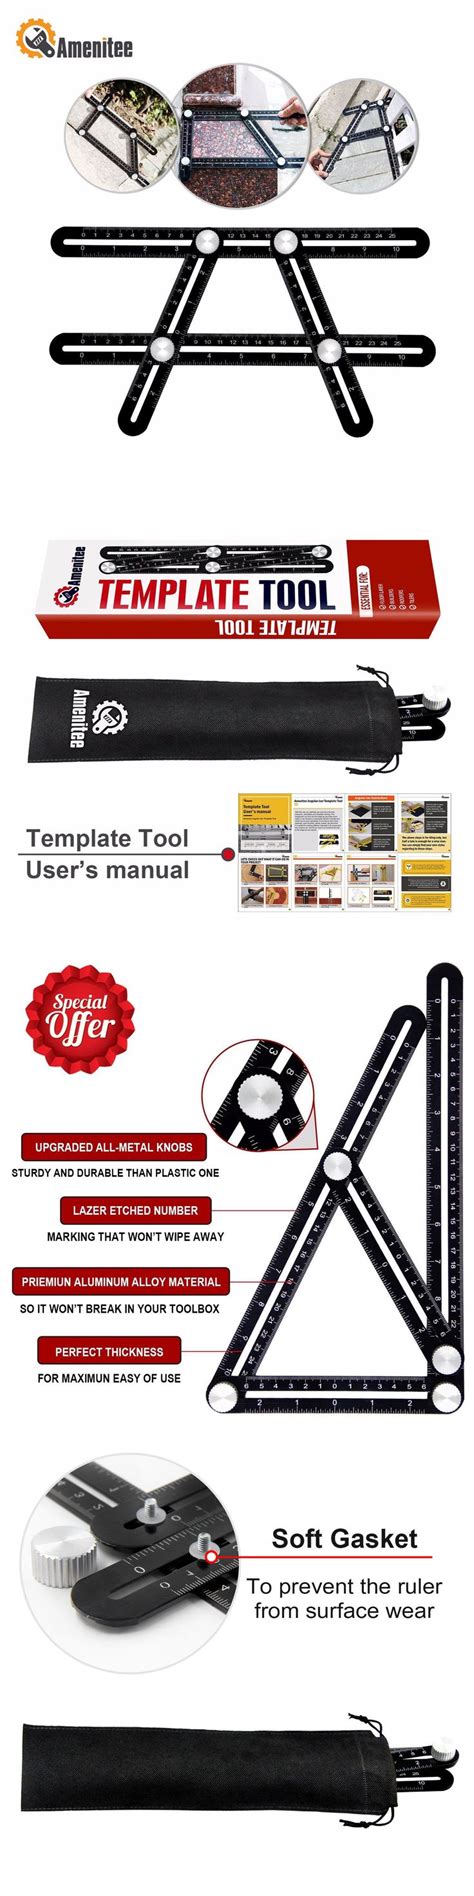 Measuring Tapes And Rulers Amenitee Ultimate Irregular Shape Copy Tool Black Buy It